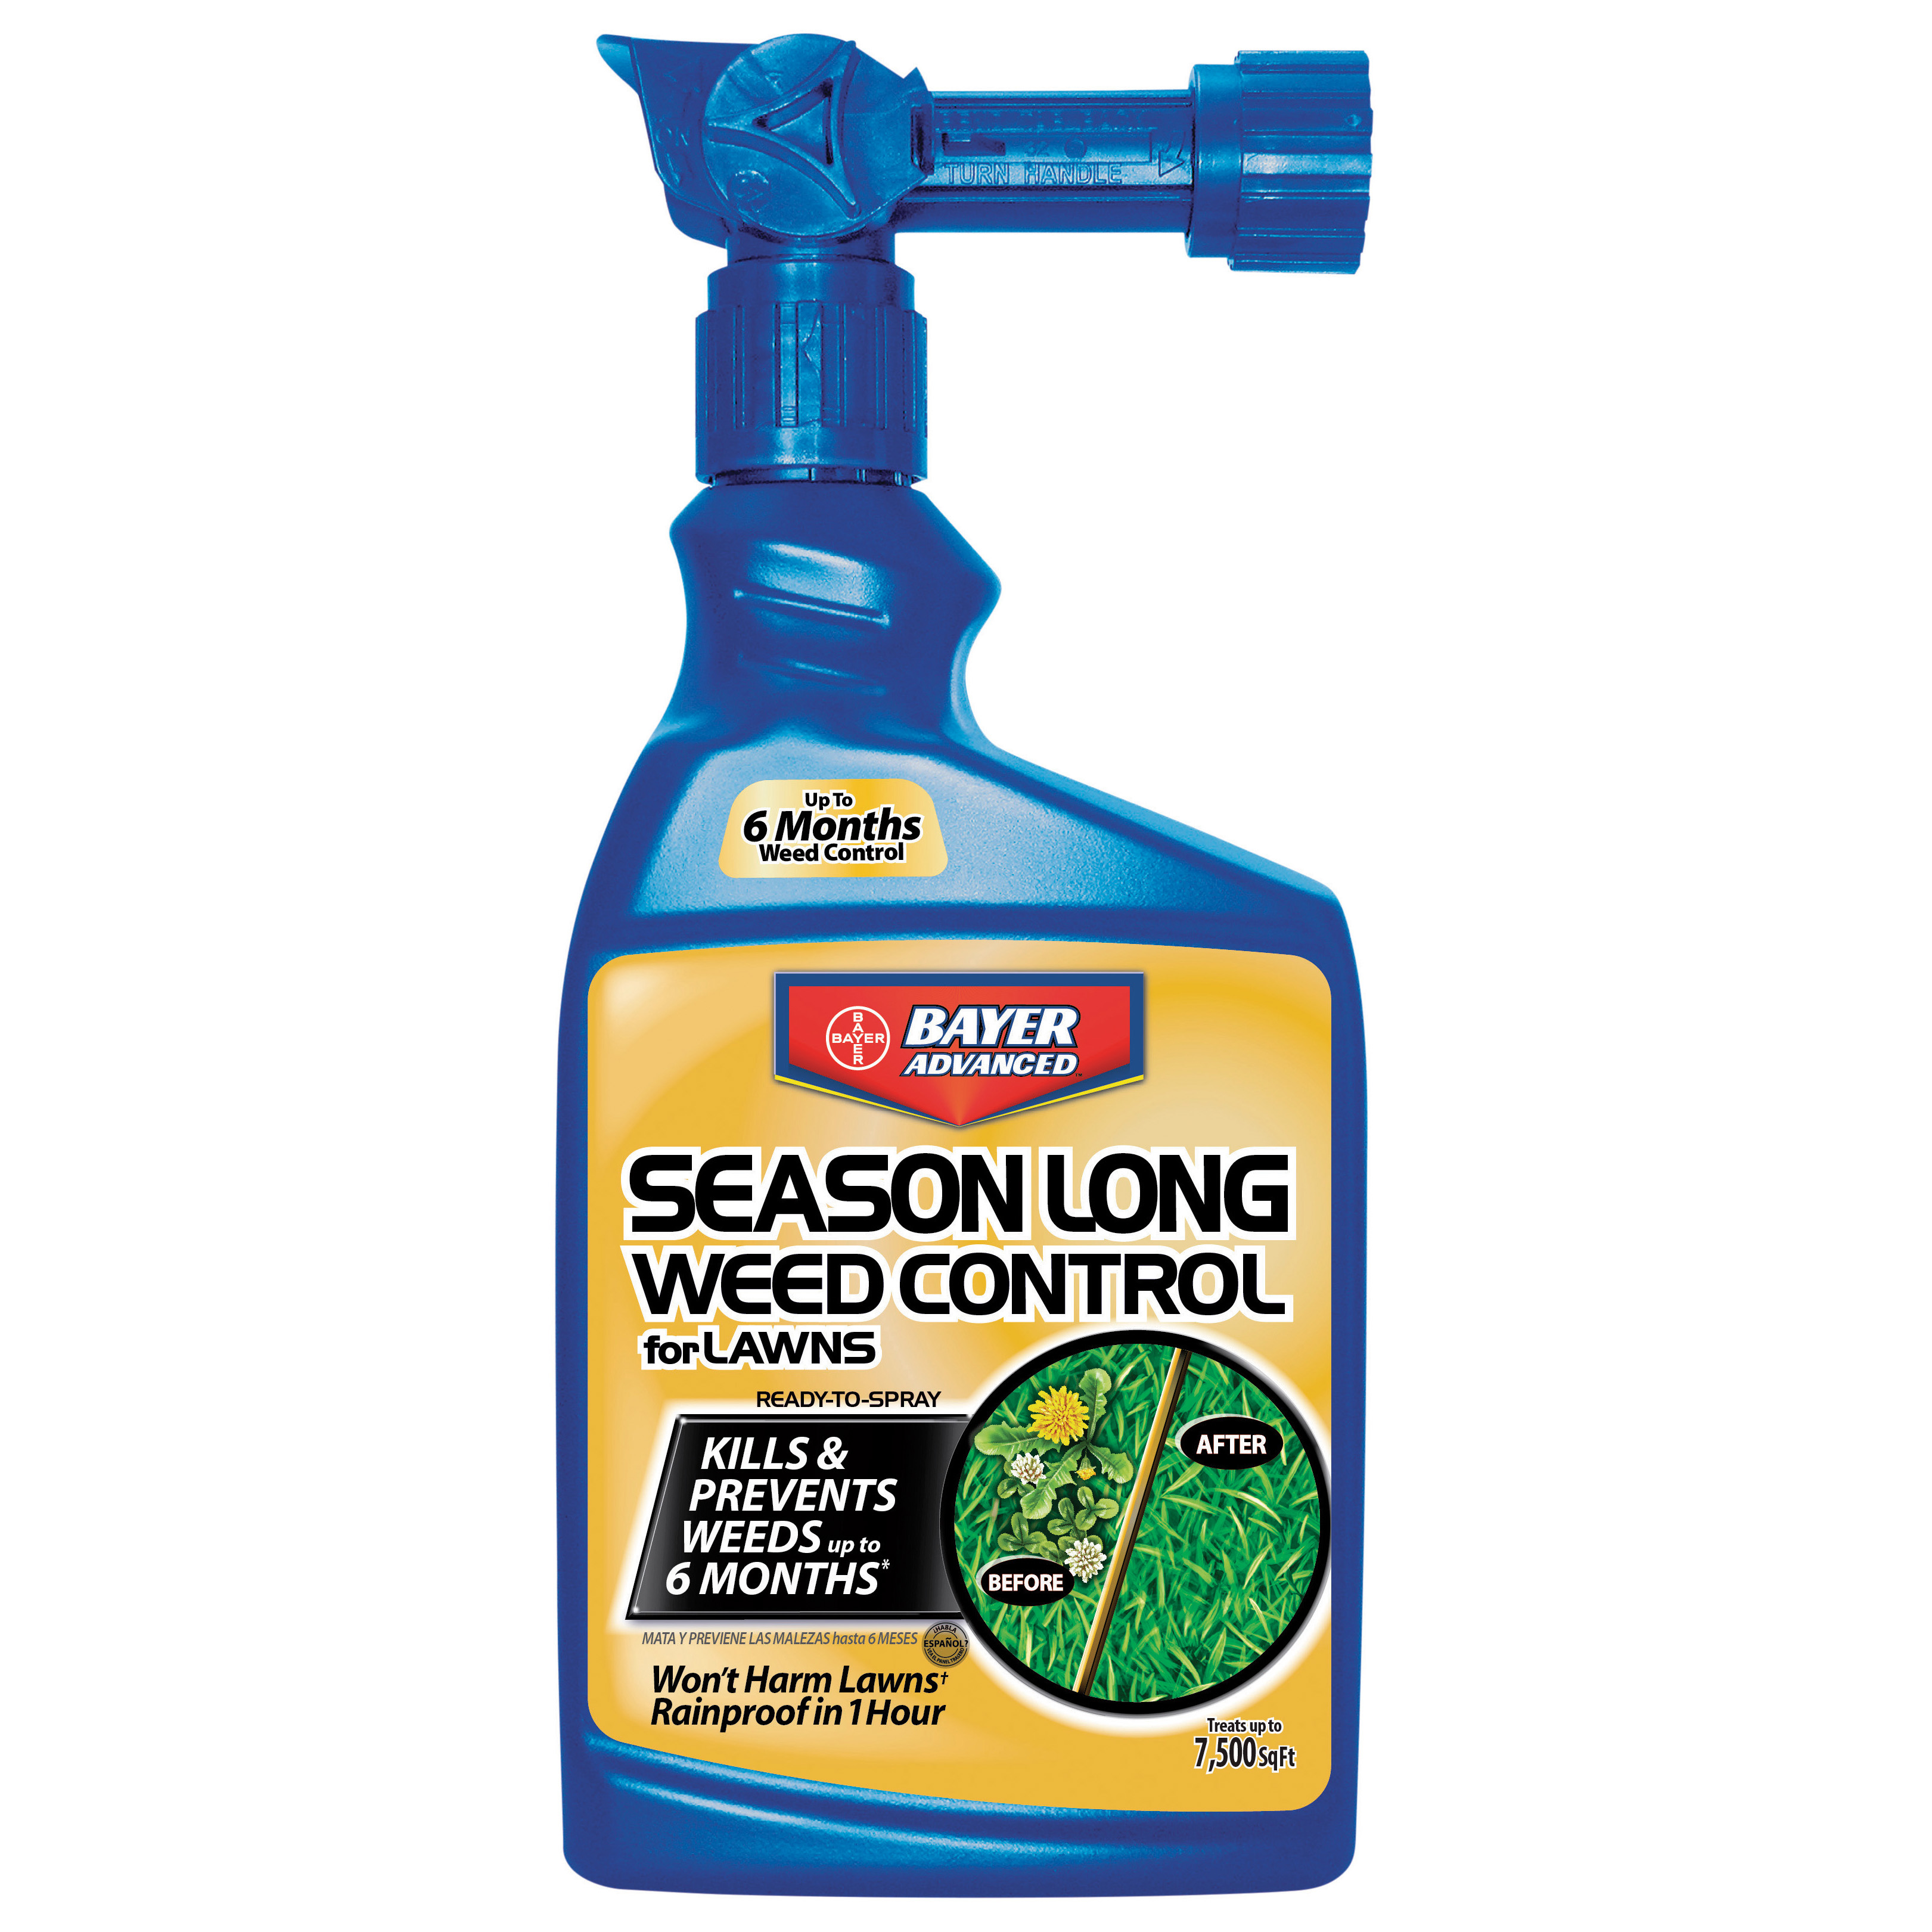 BAY704040B Bayer Season Long Weed Control Ready-to-Spray, 24 oz